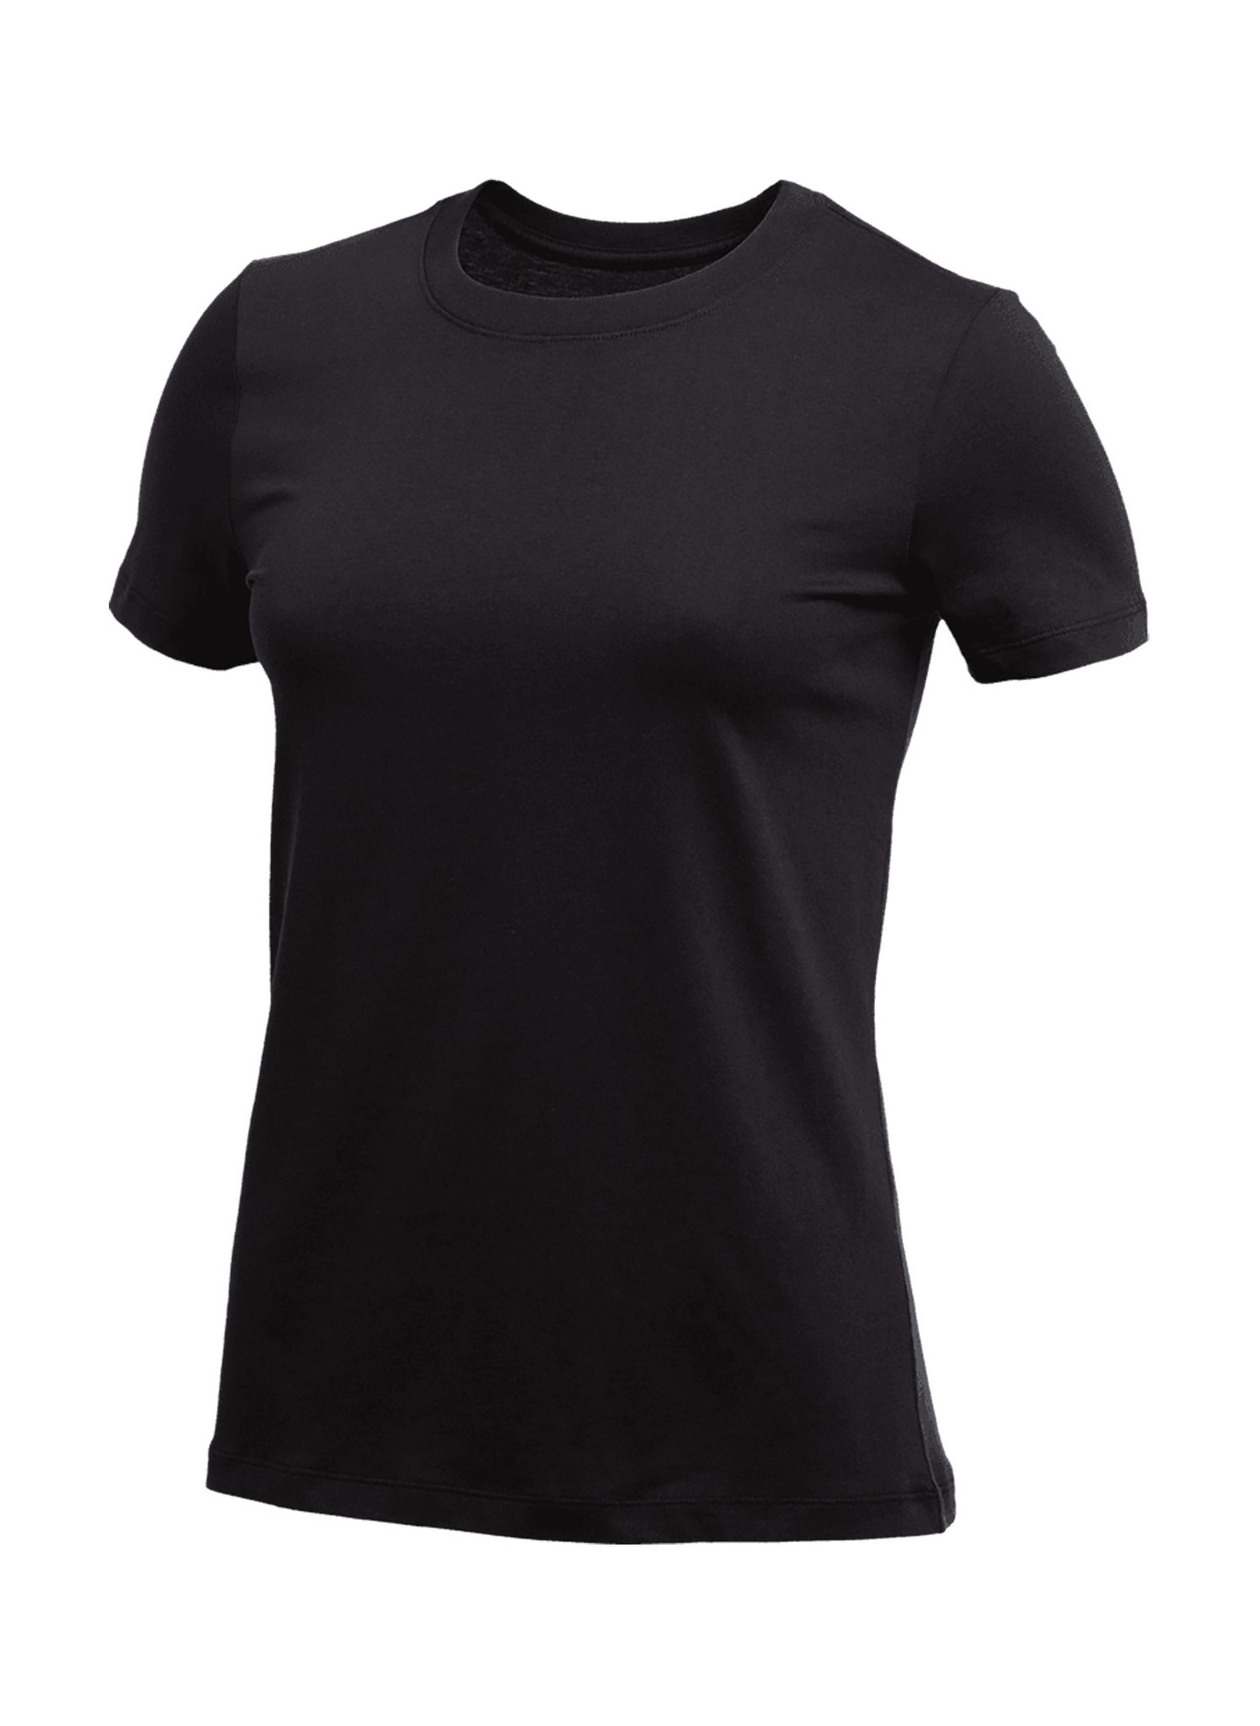 Nike Women's Black T-Shirt